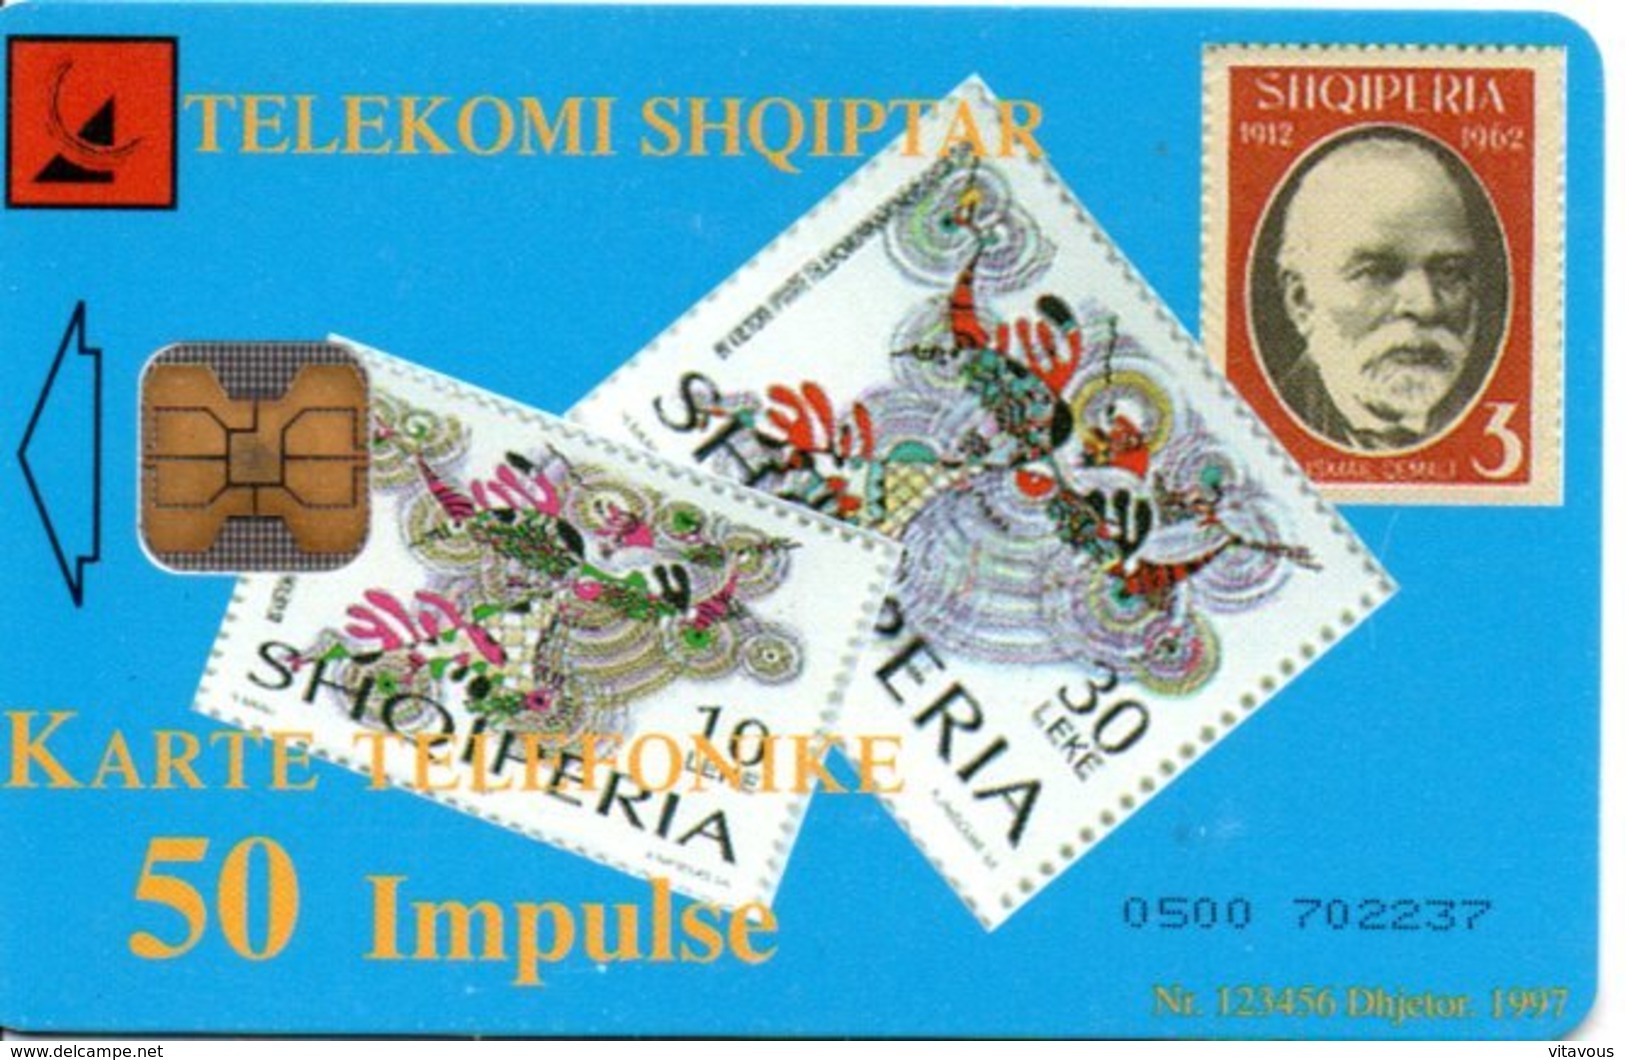 Timbre Stamp Télécarte Albanie Phonecard Téléphone PTT-VE (G 212)) - Albania